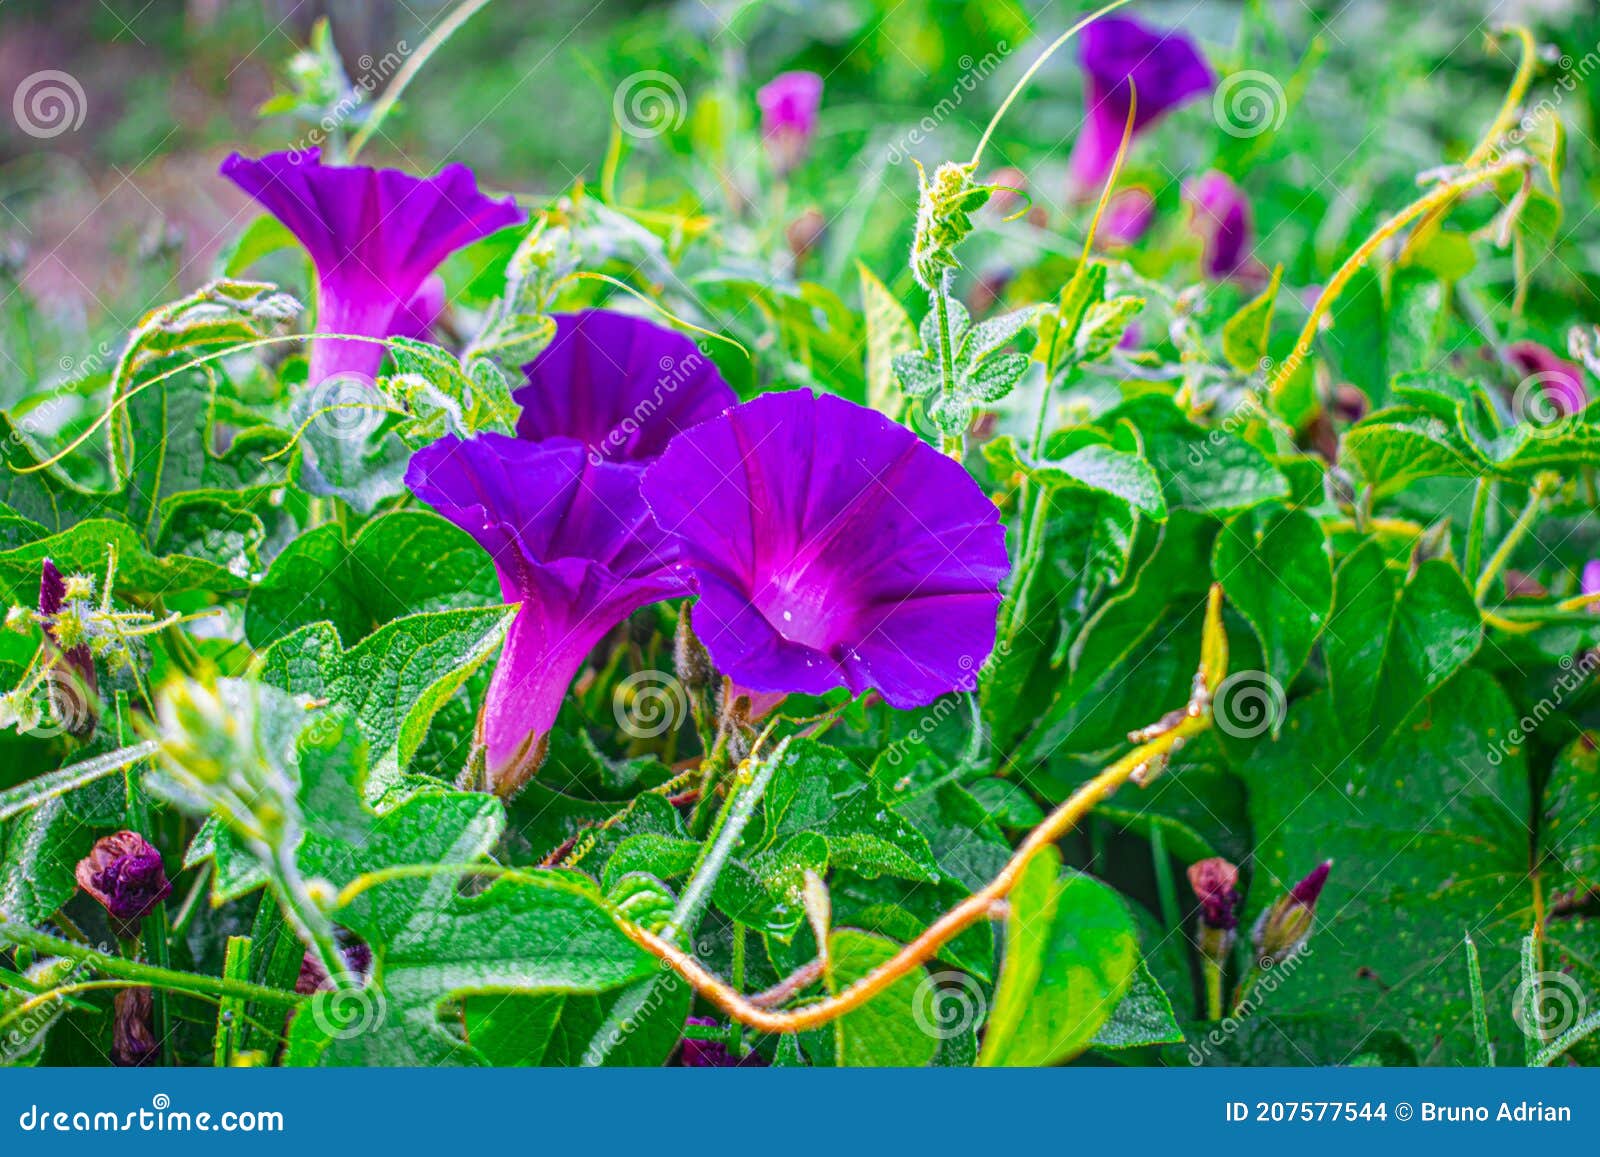 natural purple flower cajola xela